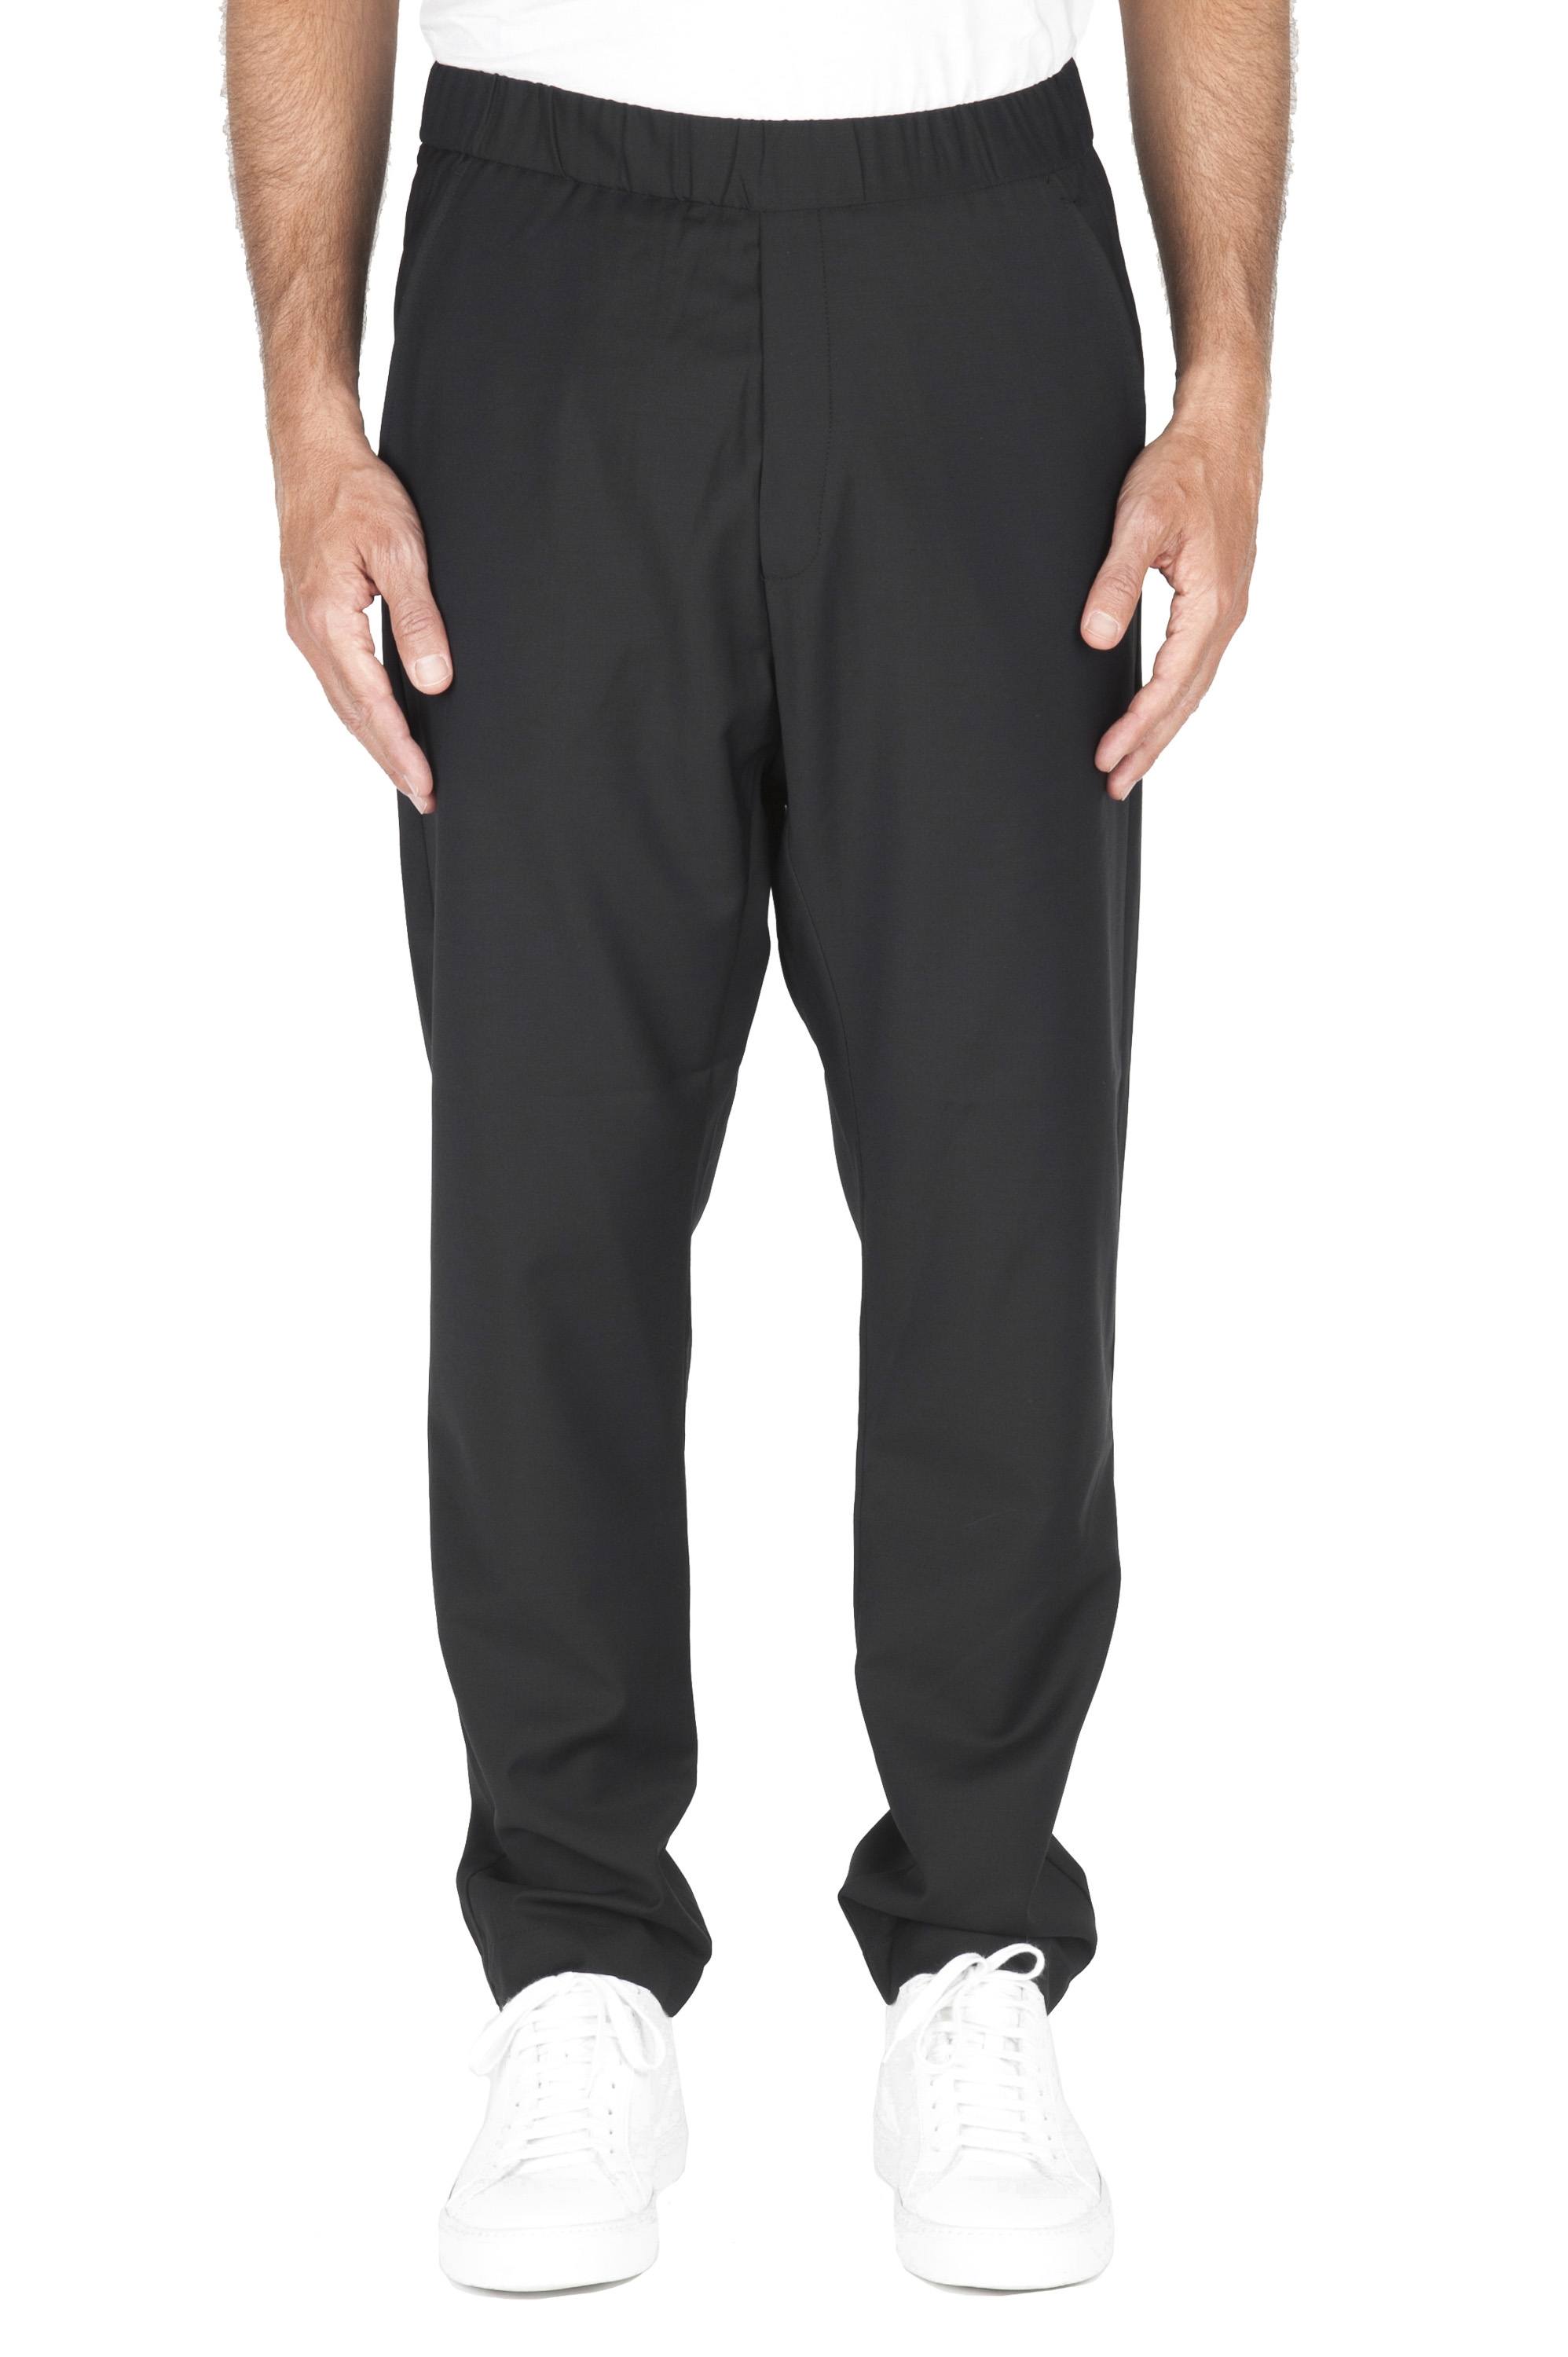 SBU 01888_19AW Pantalone con elastico in fresco di lana nero 01